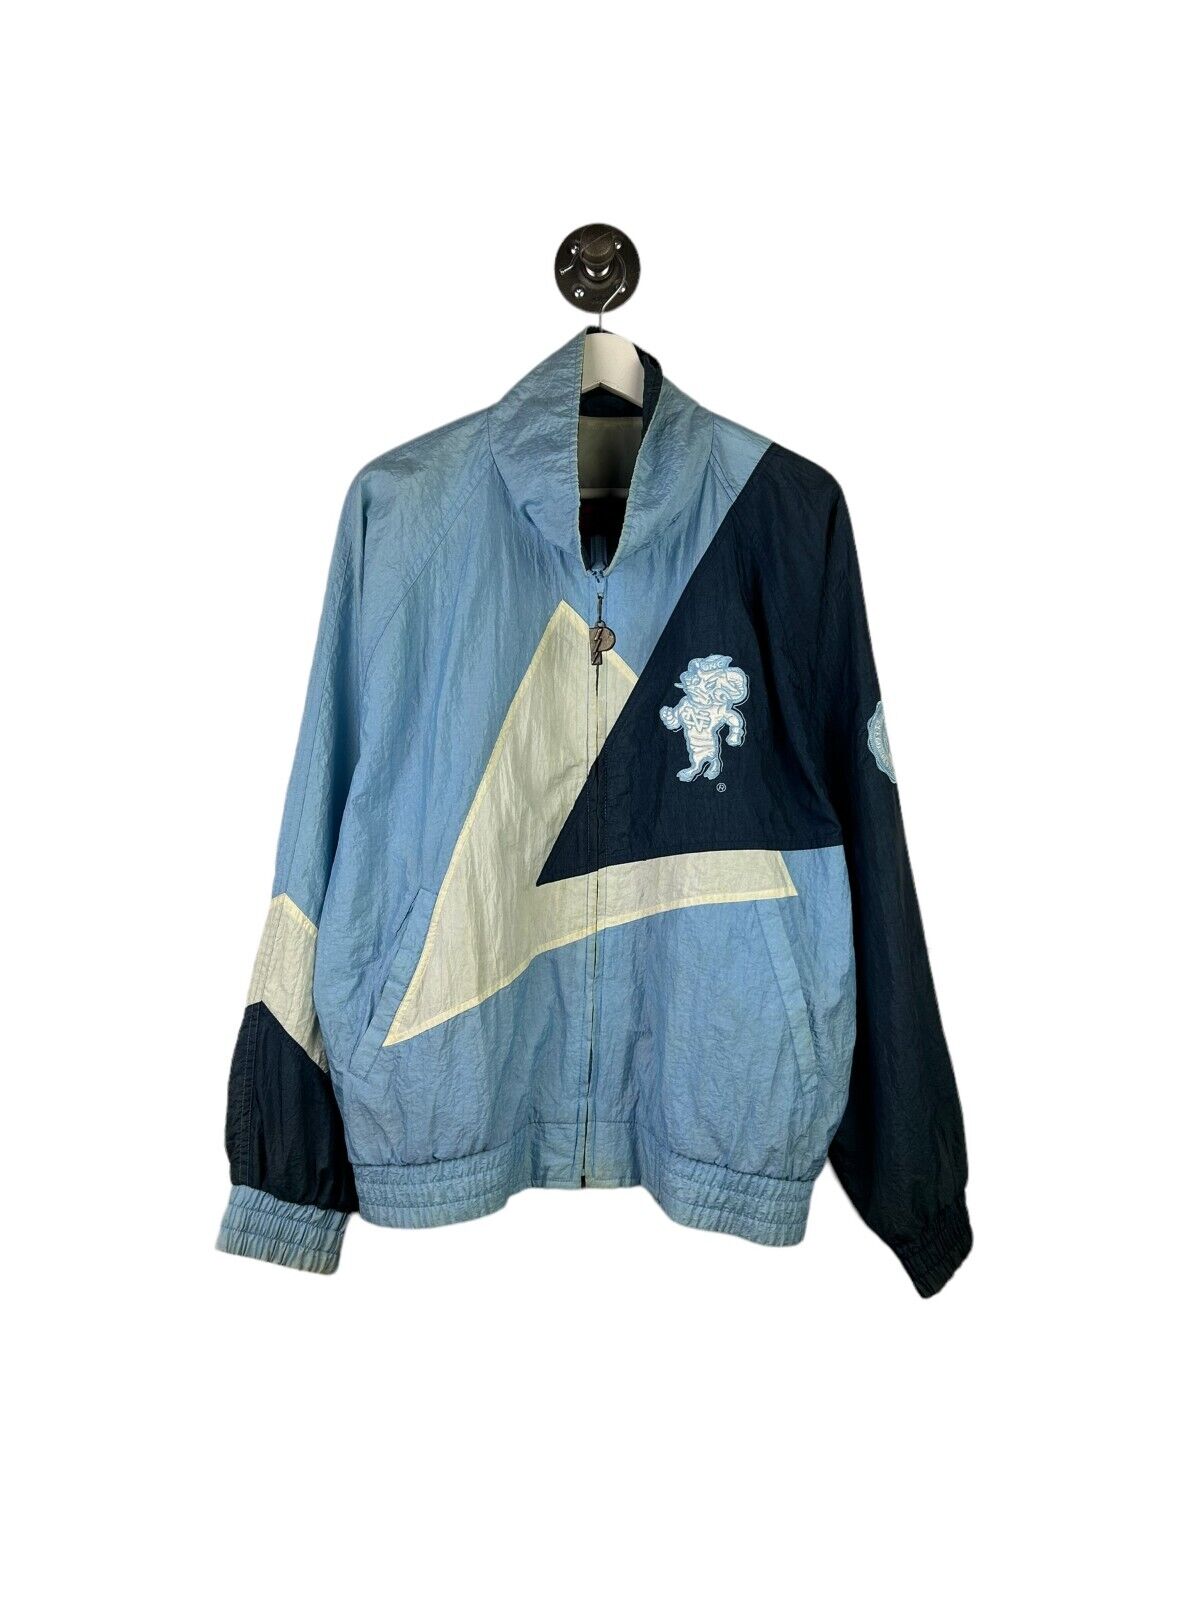 Vintage 90s UNC Tarheels NCAA Embroidered Pro Player Nylon Jacket Size Medium